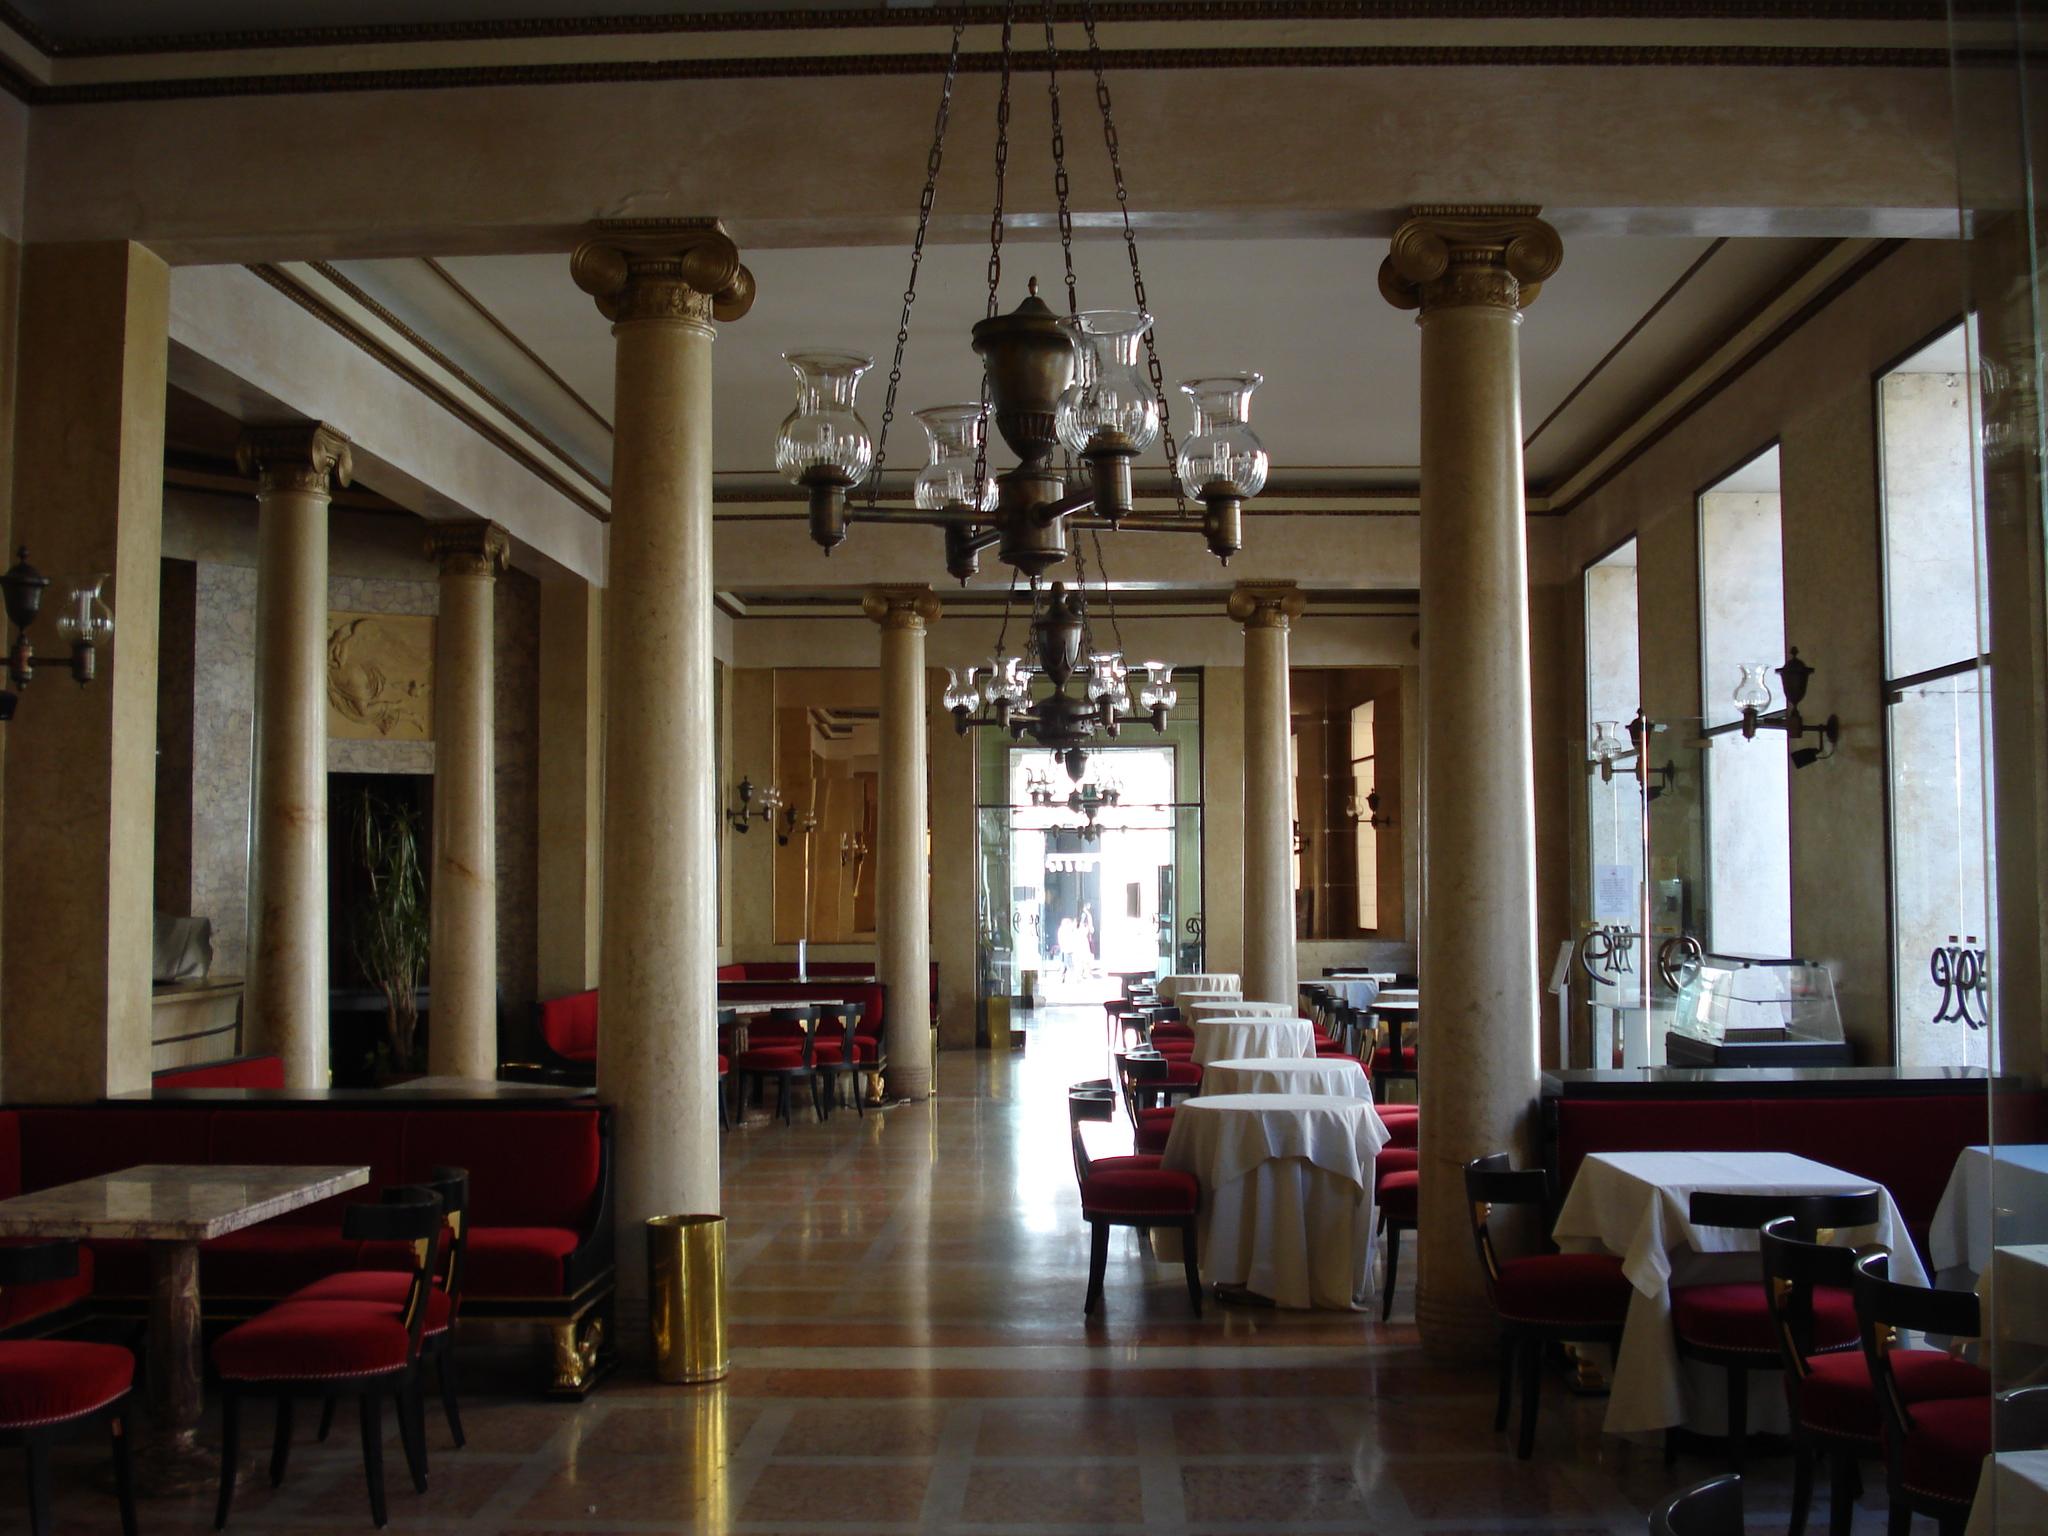 Cover image of this place Caffè Pedrocchi